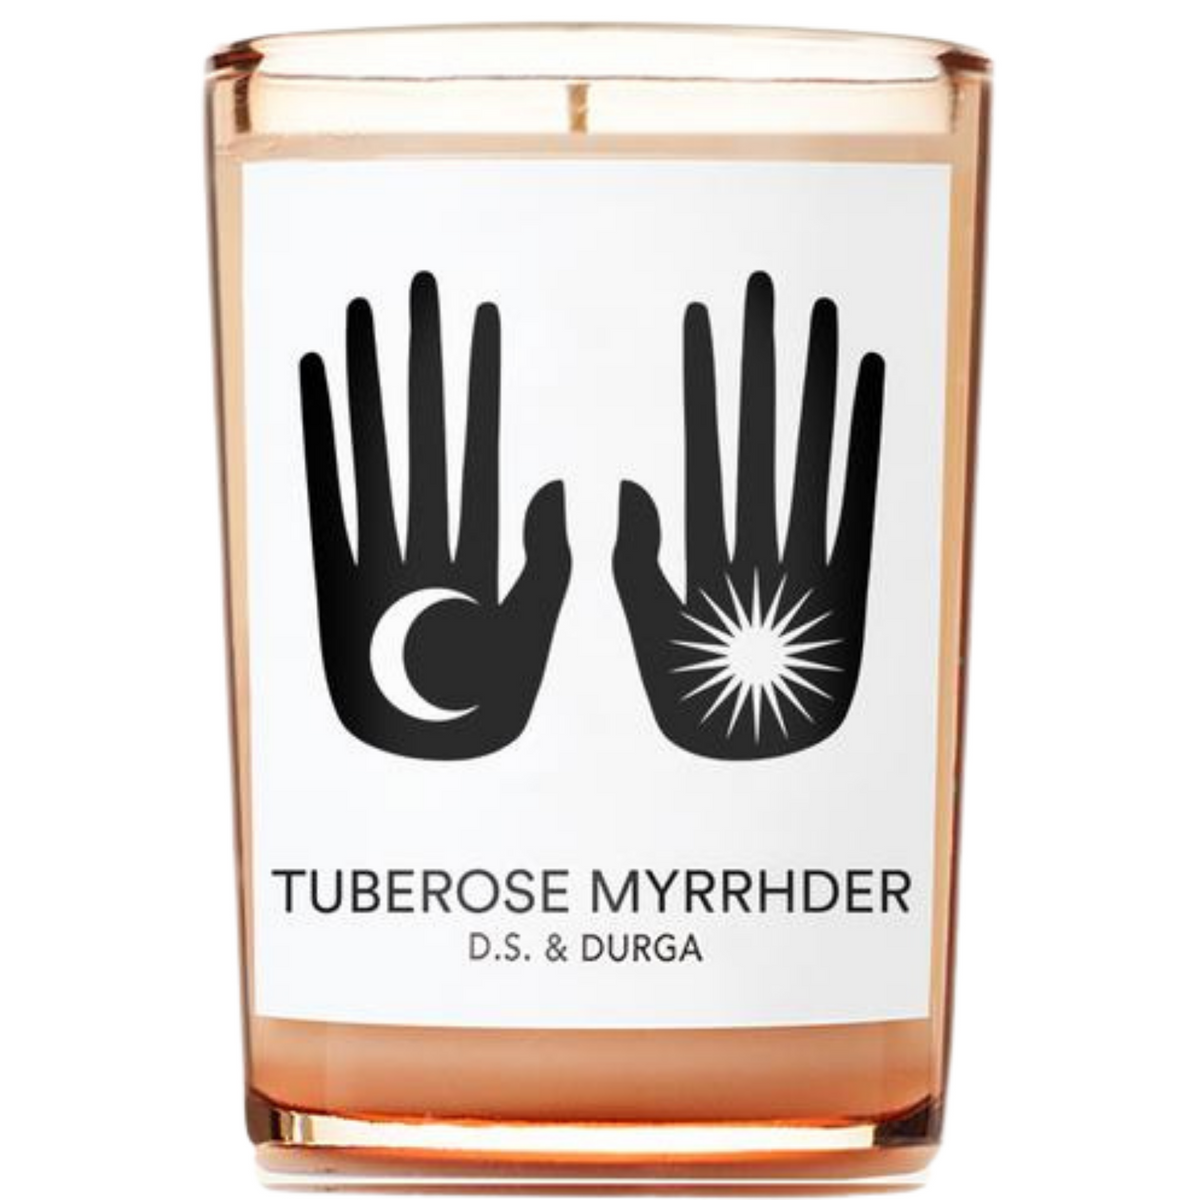 Primary Image of Tuberose Myrrhder